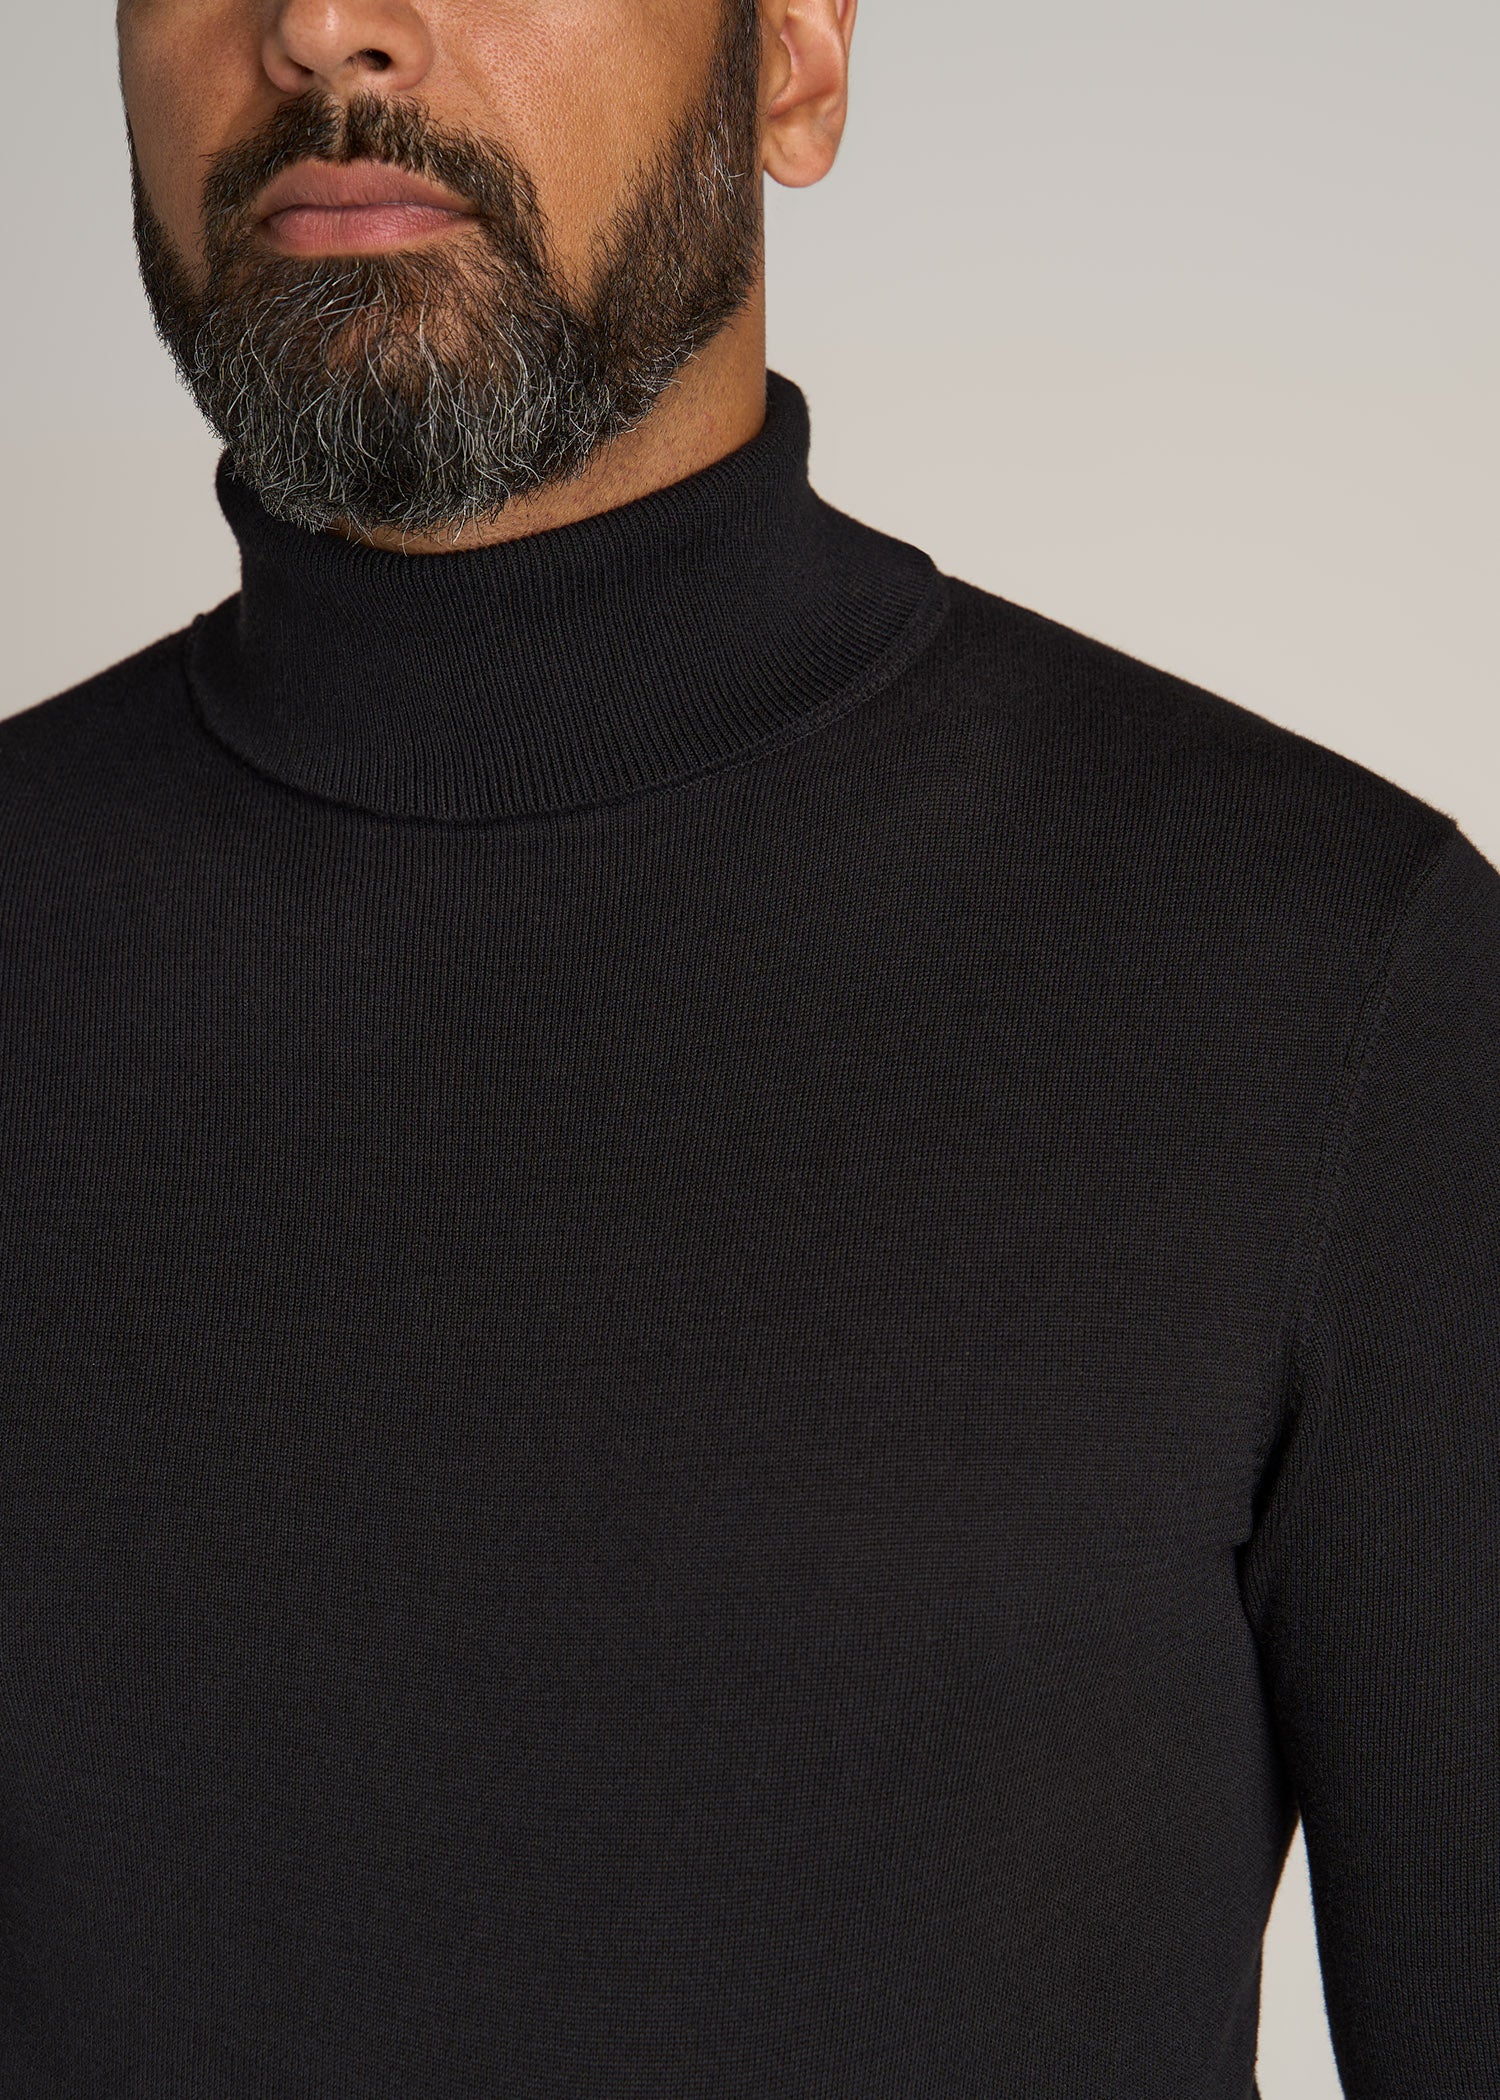 Men's Tall Turtleneck Sweater | American Tall